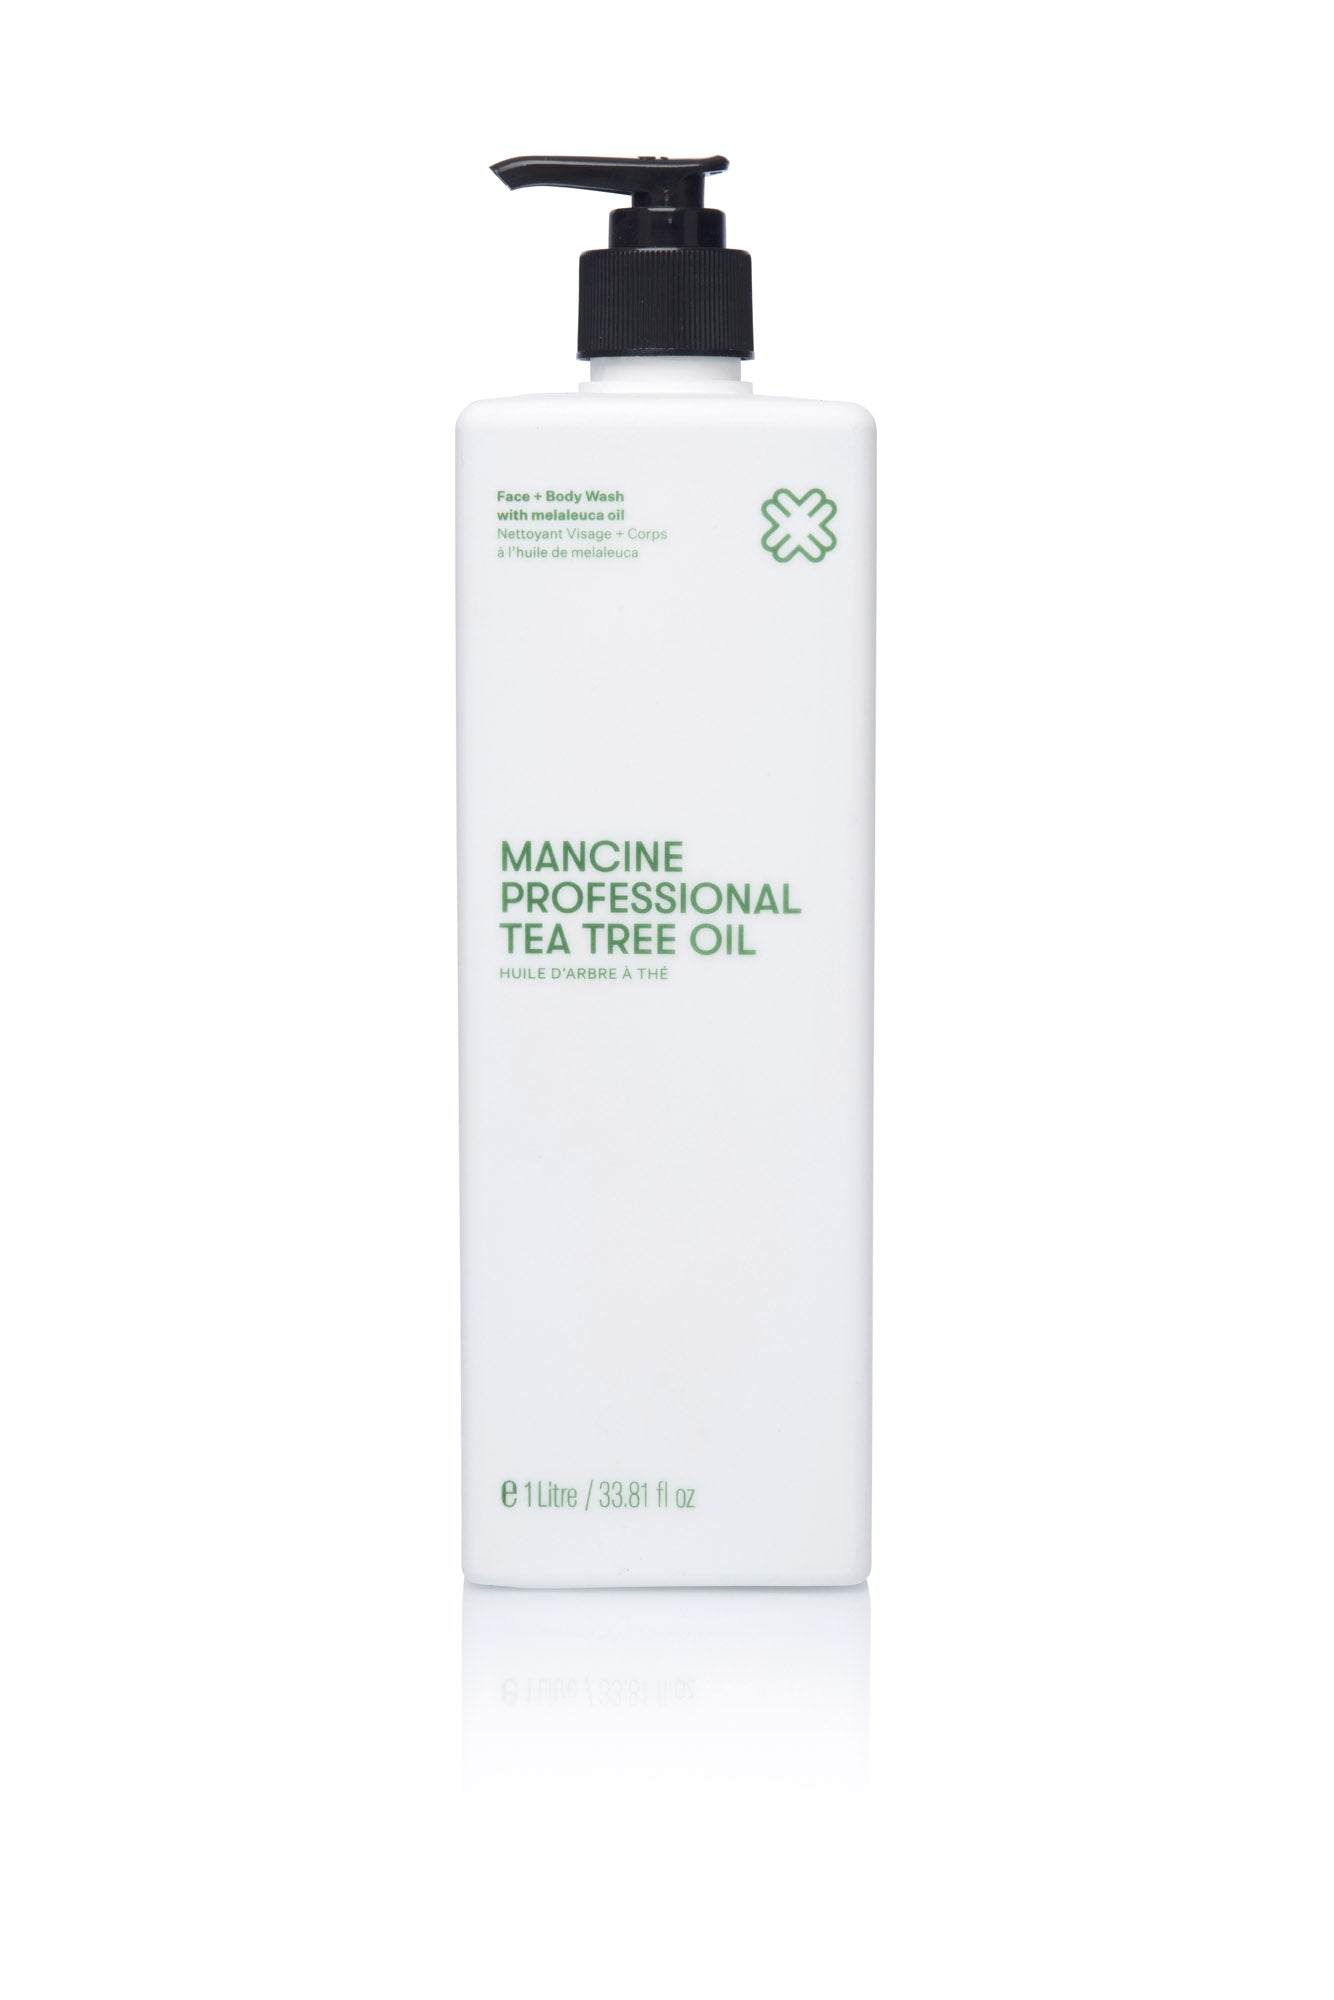 Mancine Professional Tea Tree Oil Face & Body Wash 1 Litre